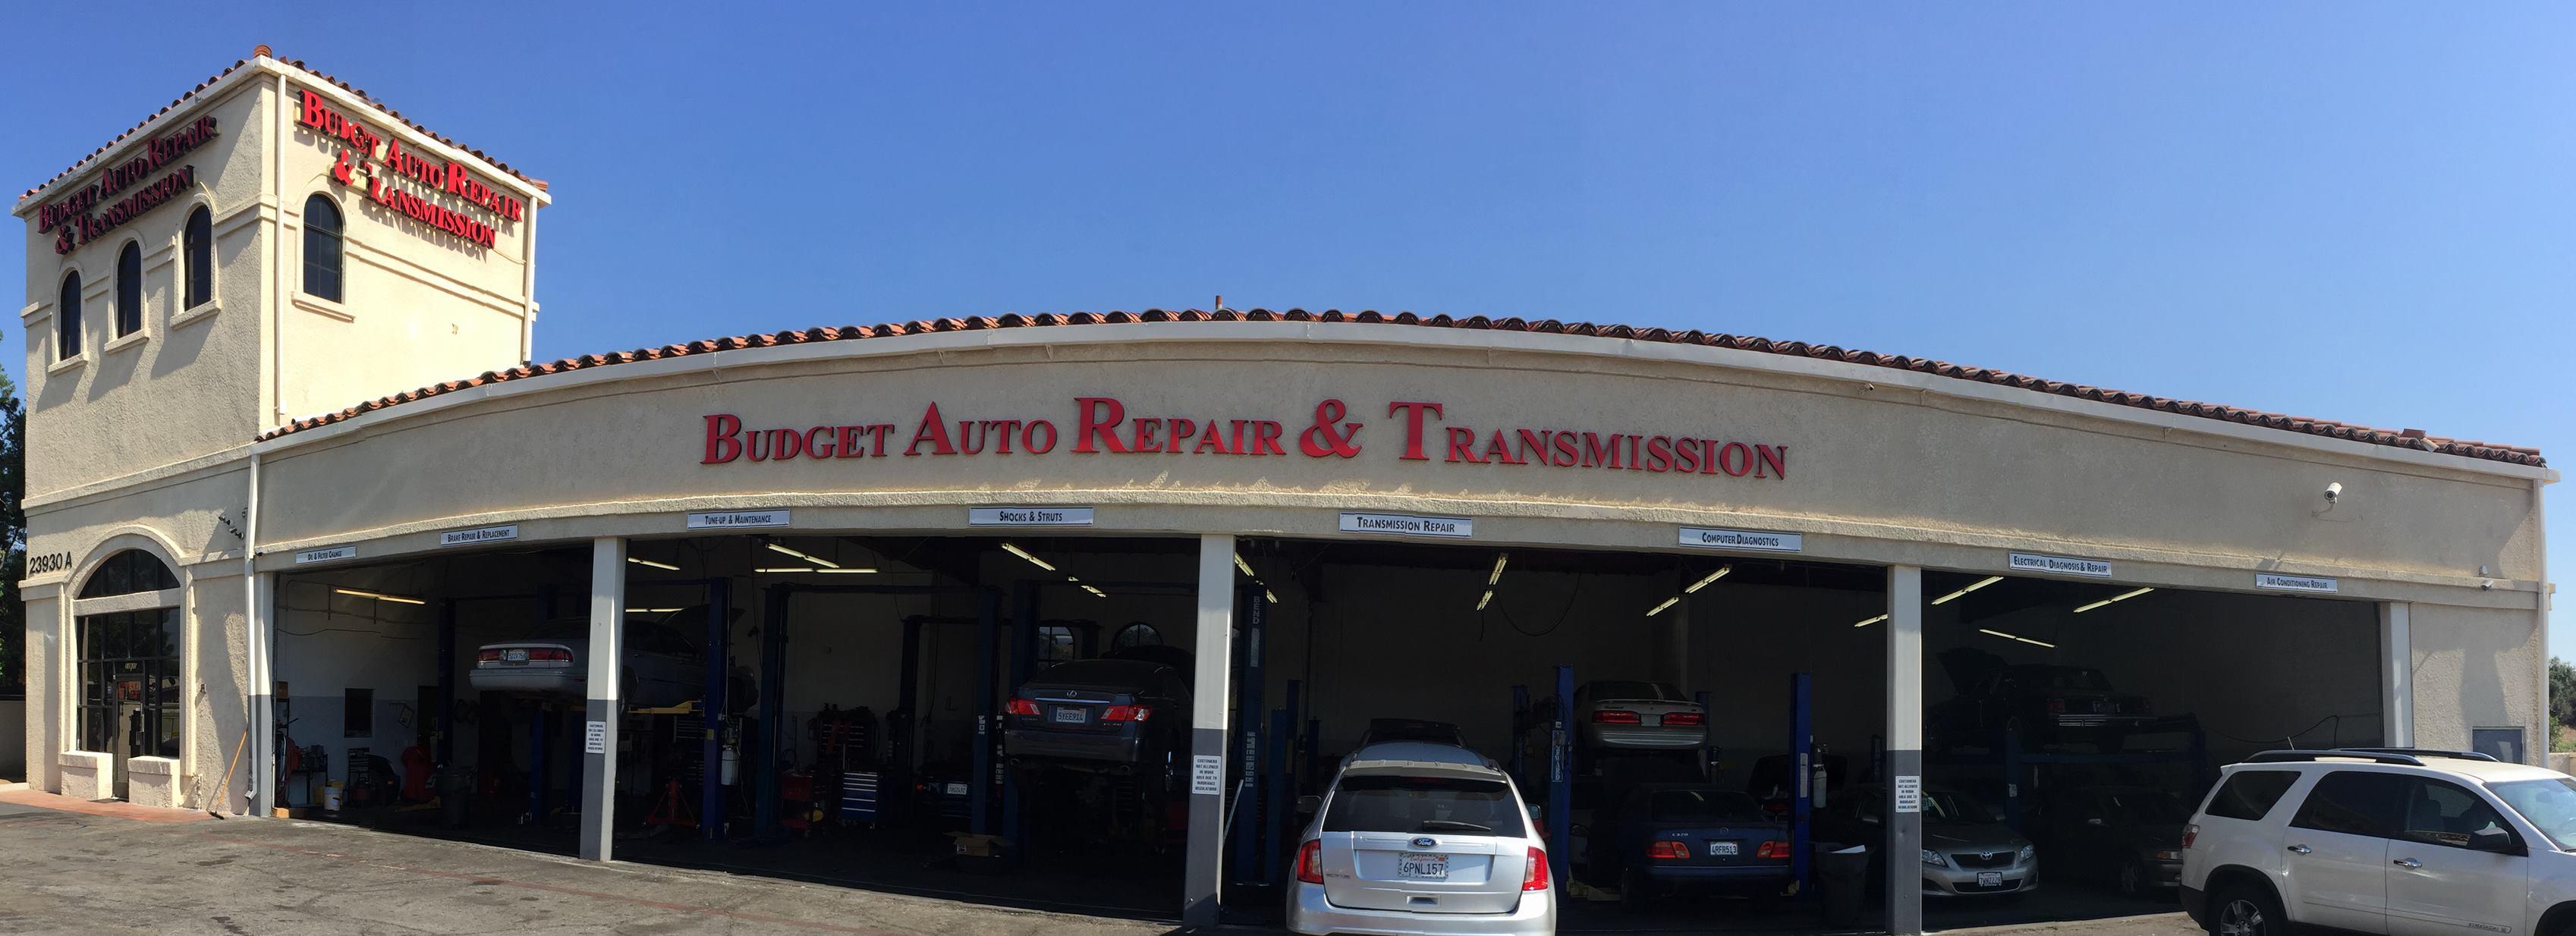 Budget Auto Repair & Transmission Photo